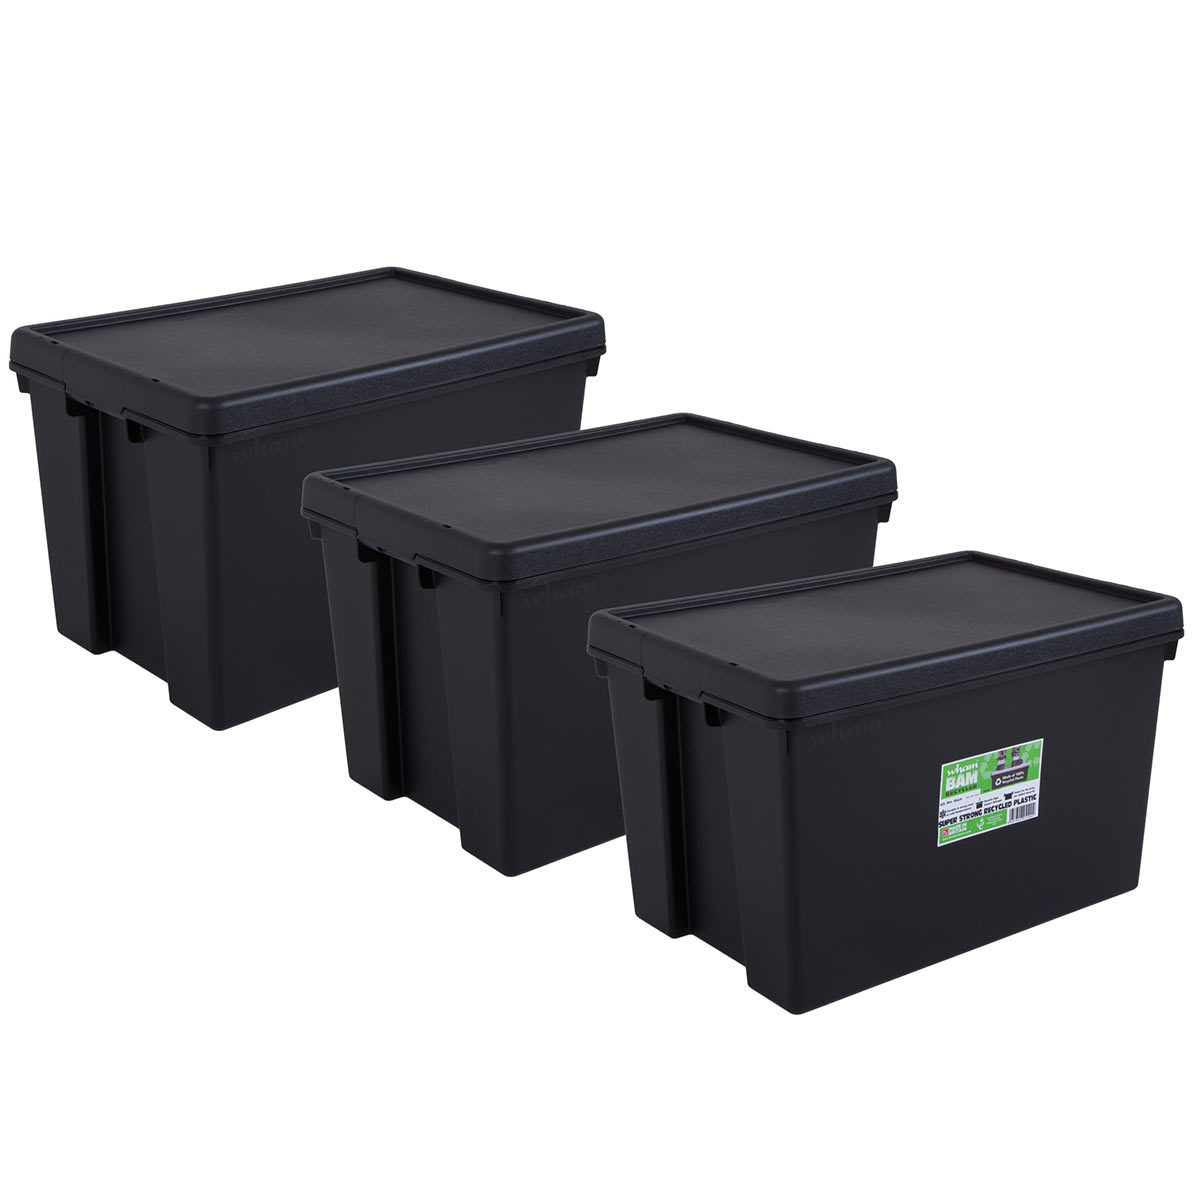 Wham Bam 62 Litre Recycled Heavy Duty Plastic Storage Box...